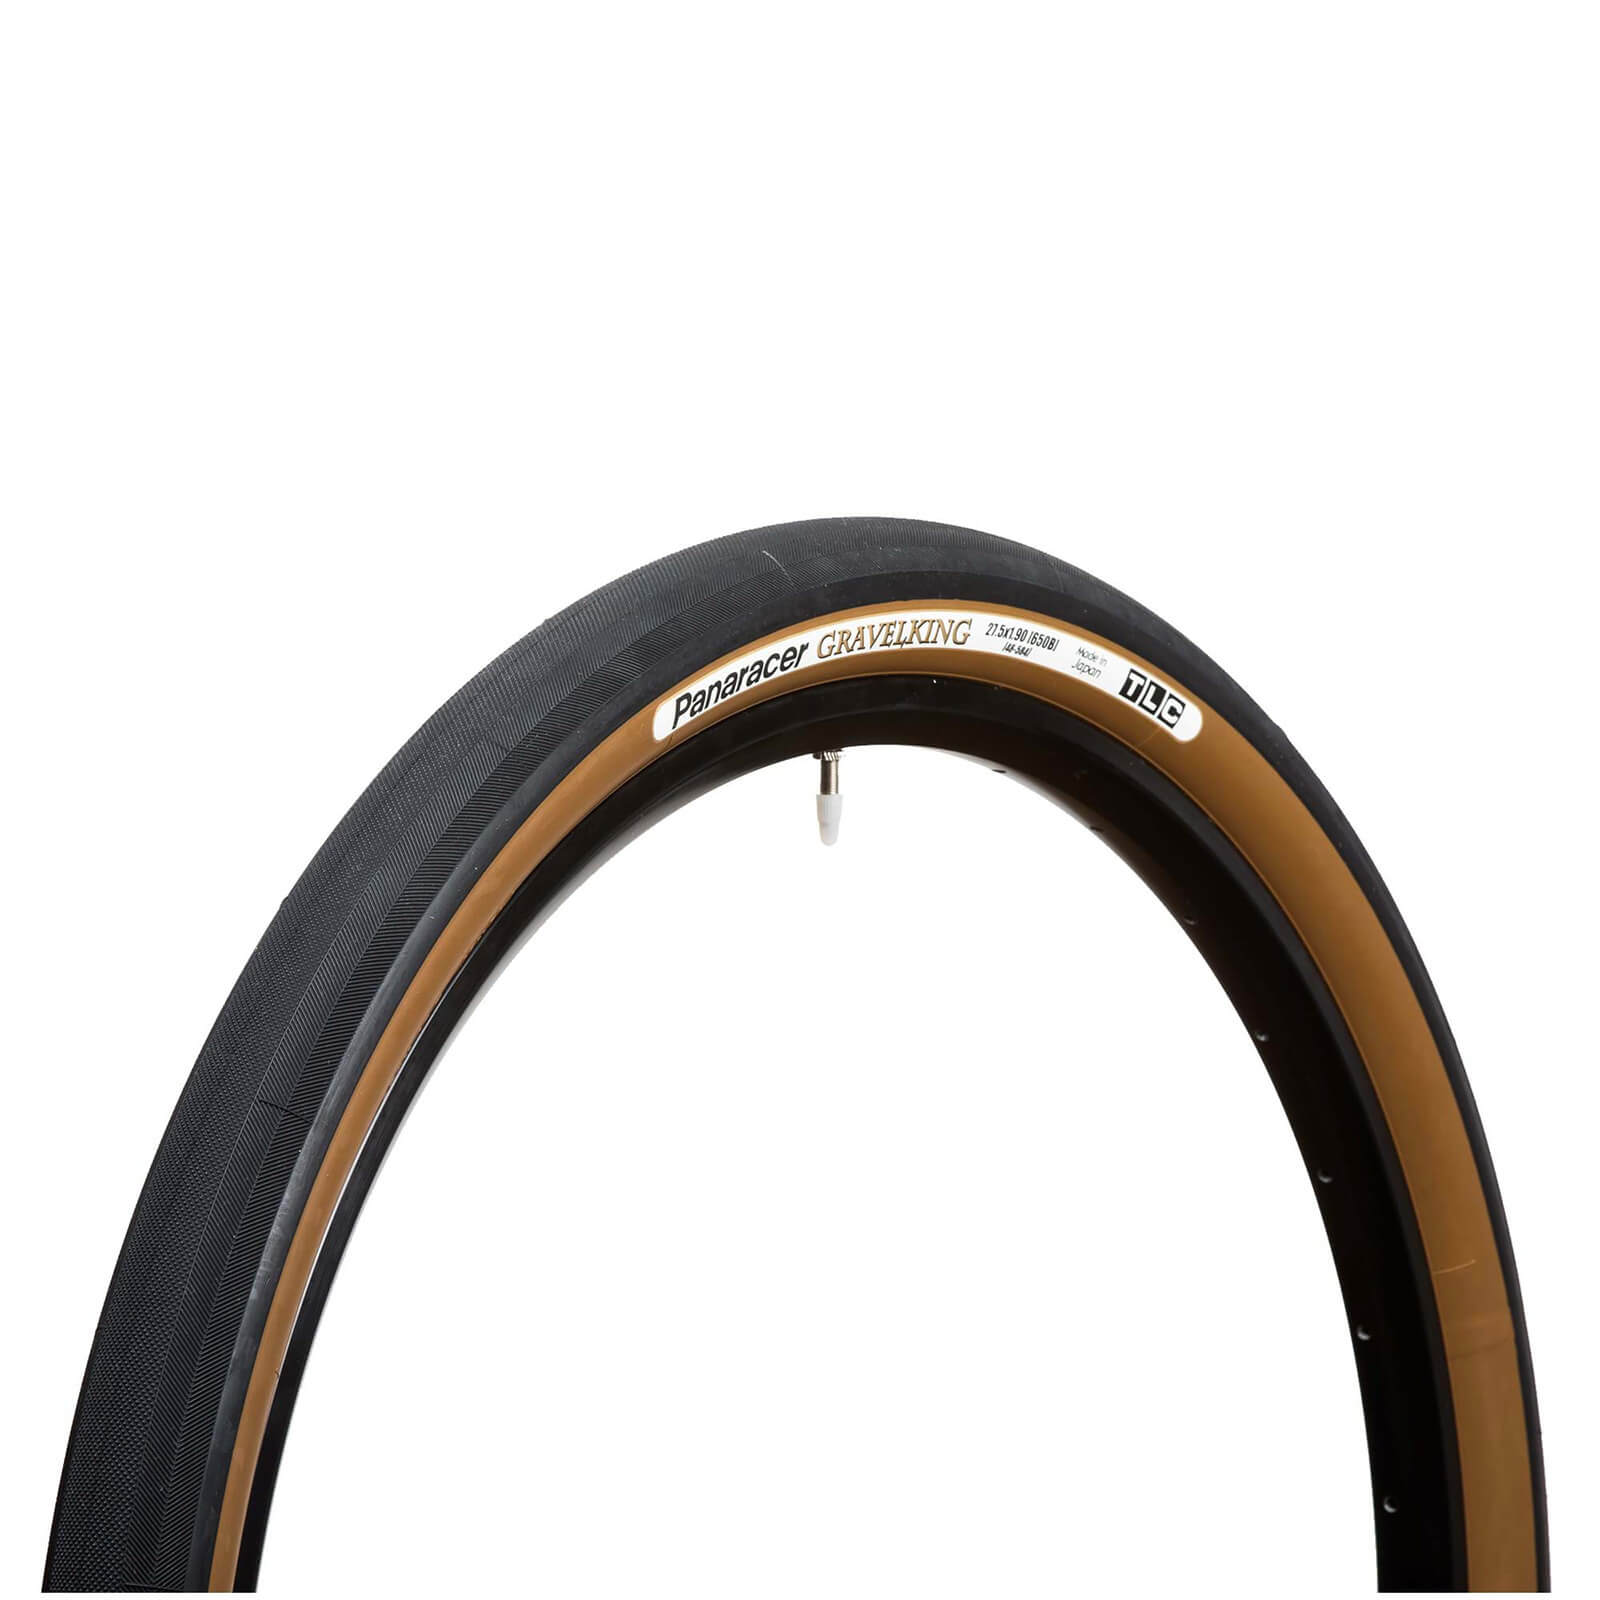 Panaracer Gravel King Clincher Tubeless Ready MTB Tyre - 27.5in x 1.75in - black/brown